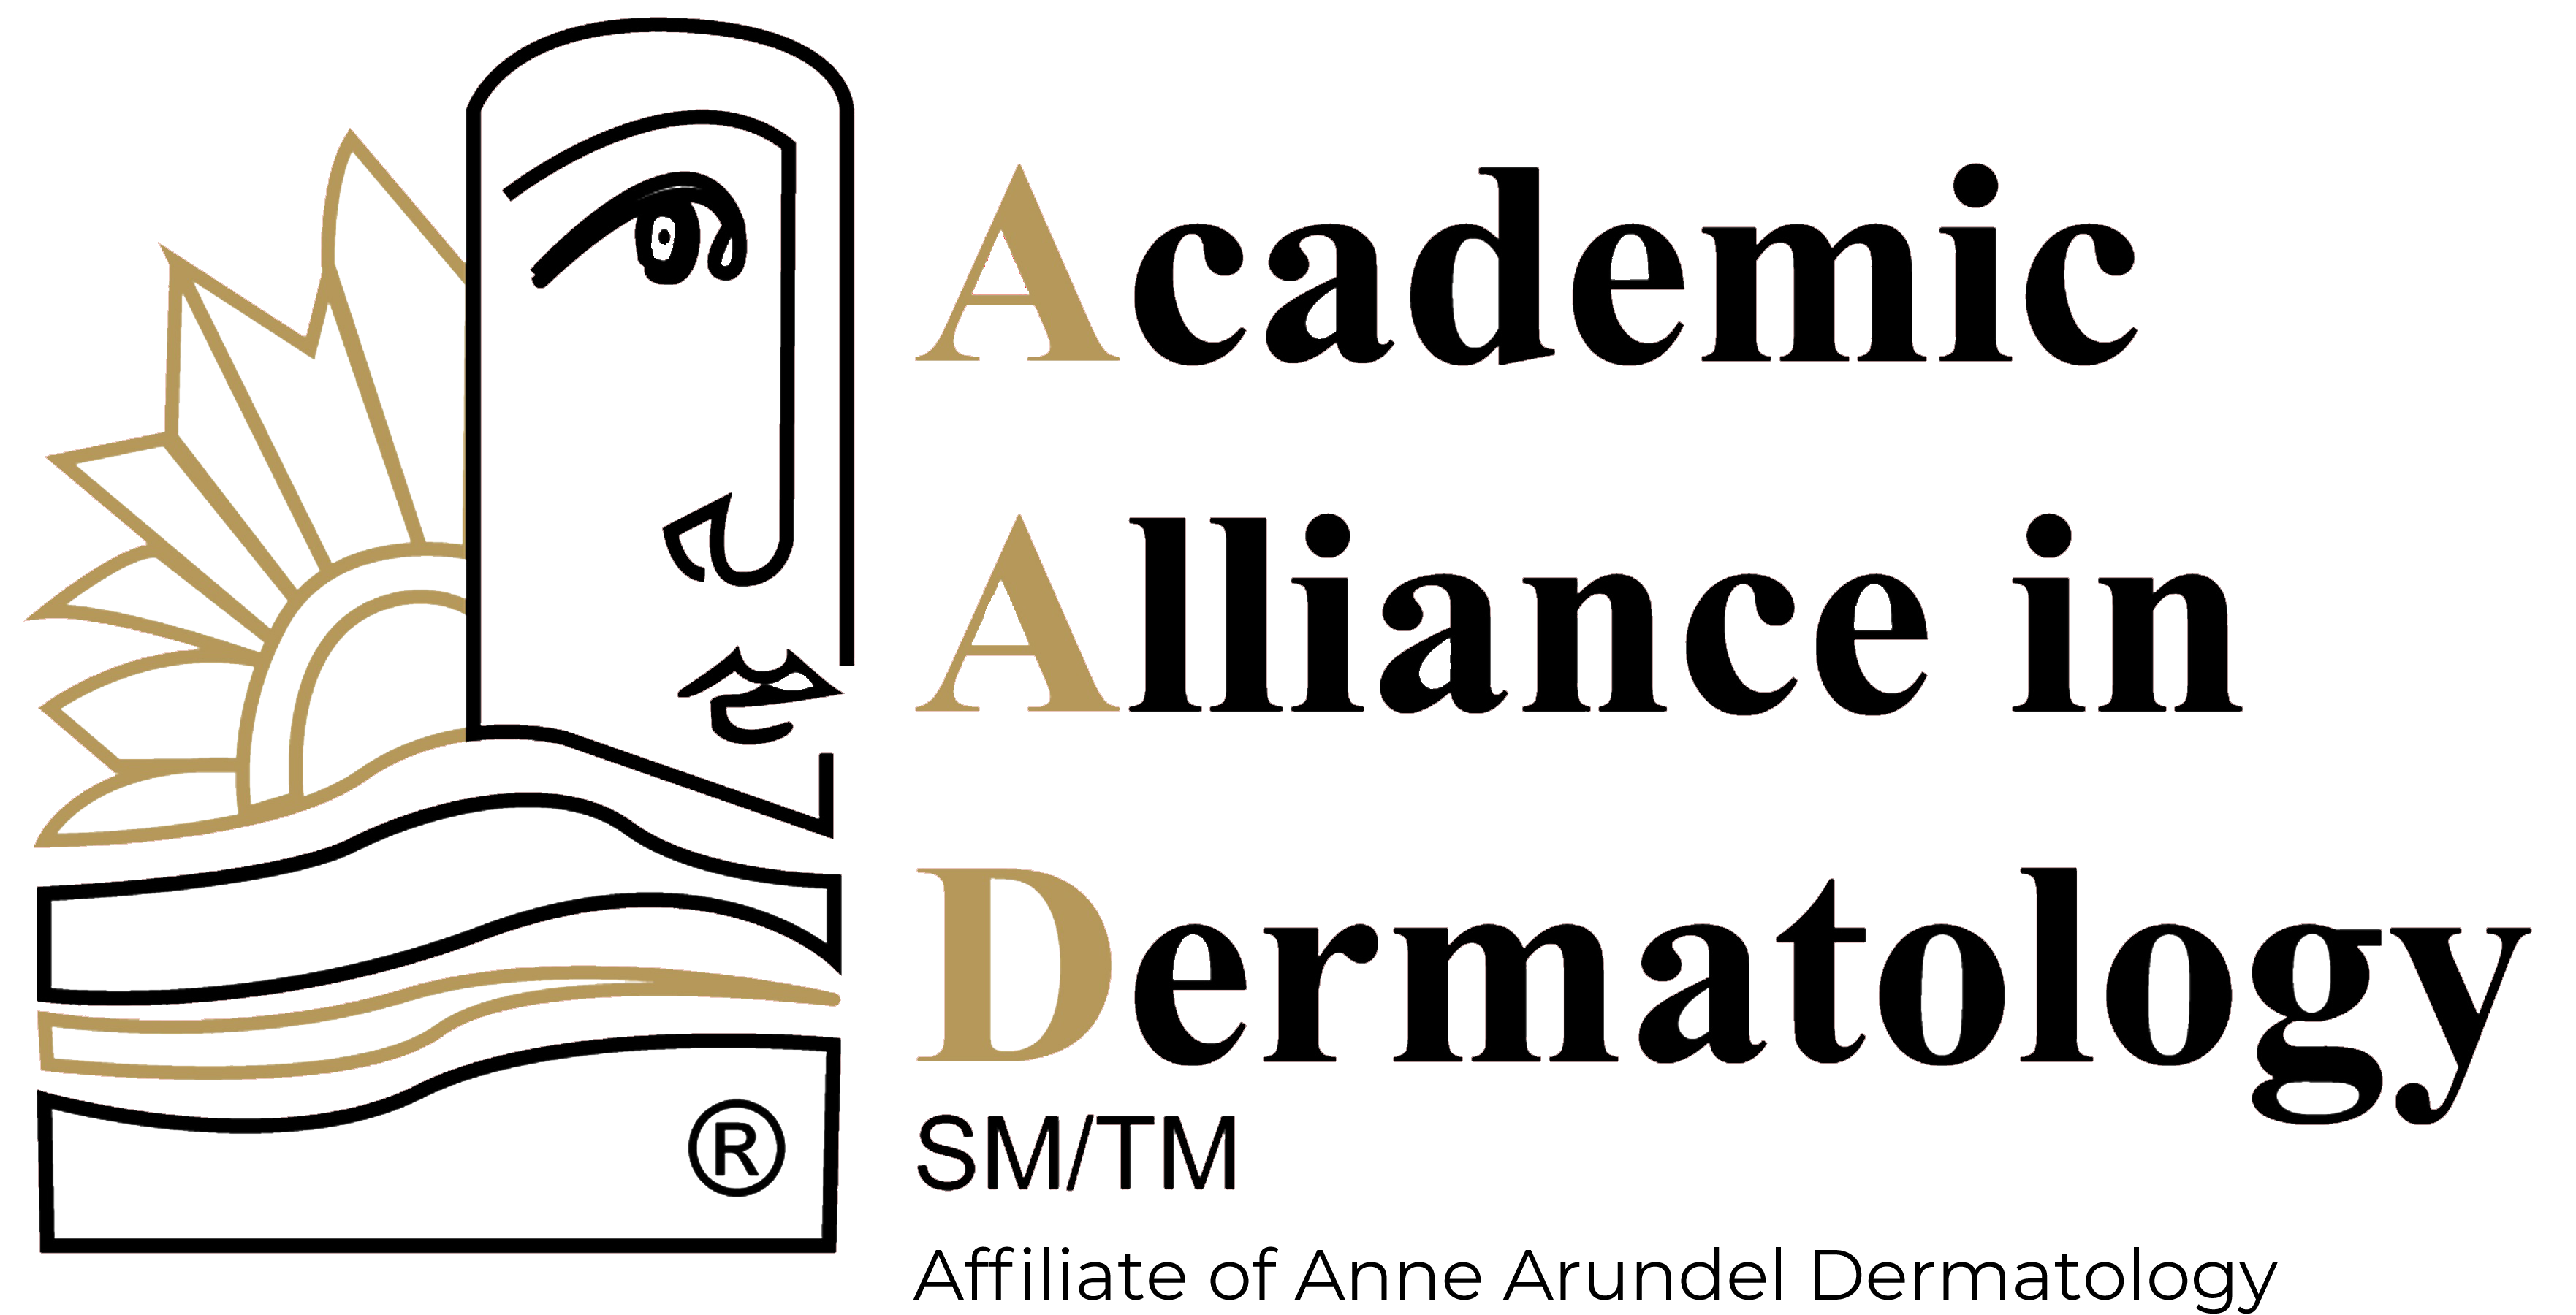 Academic Alliance In Dermatology